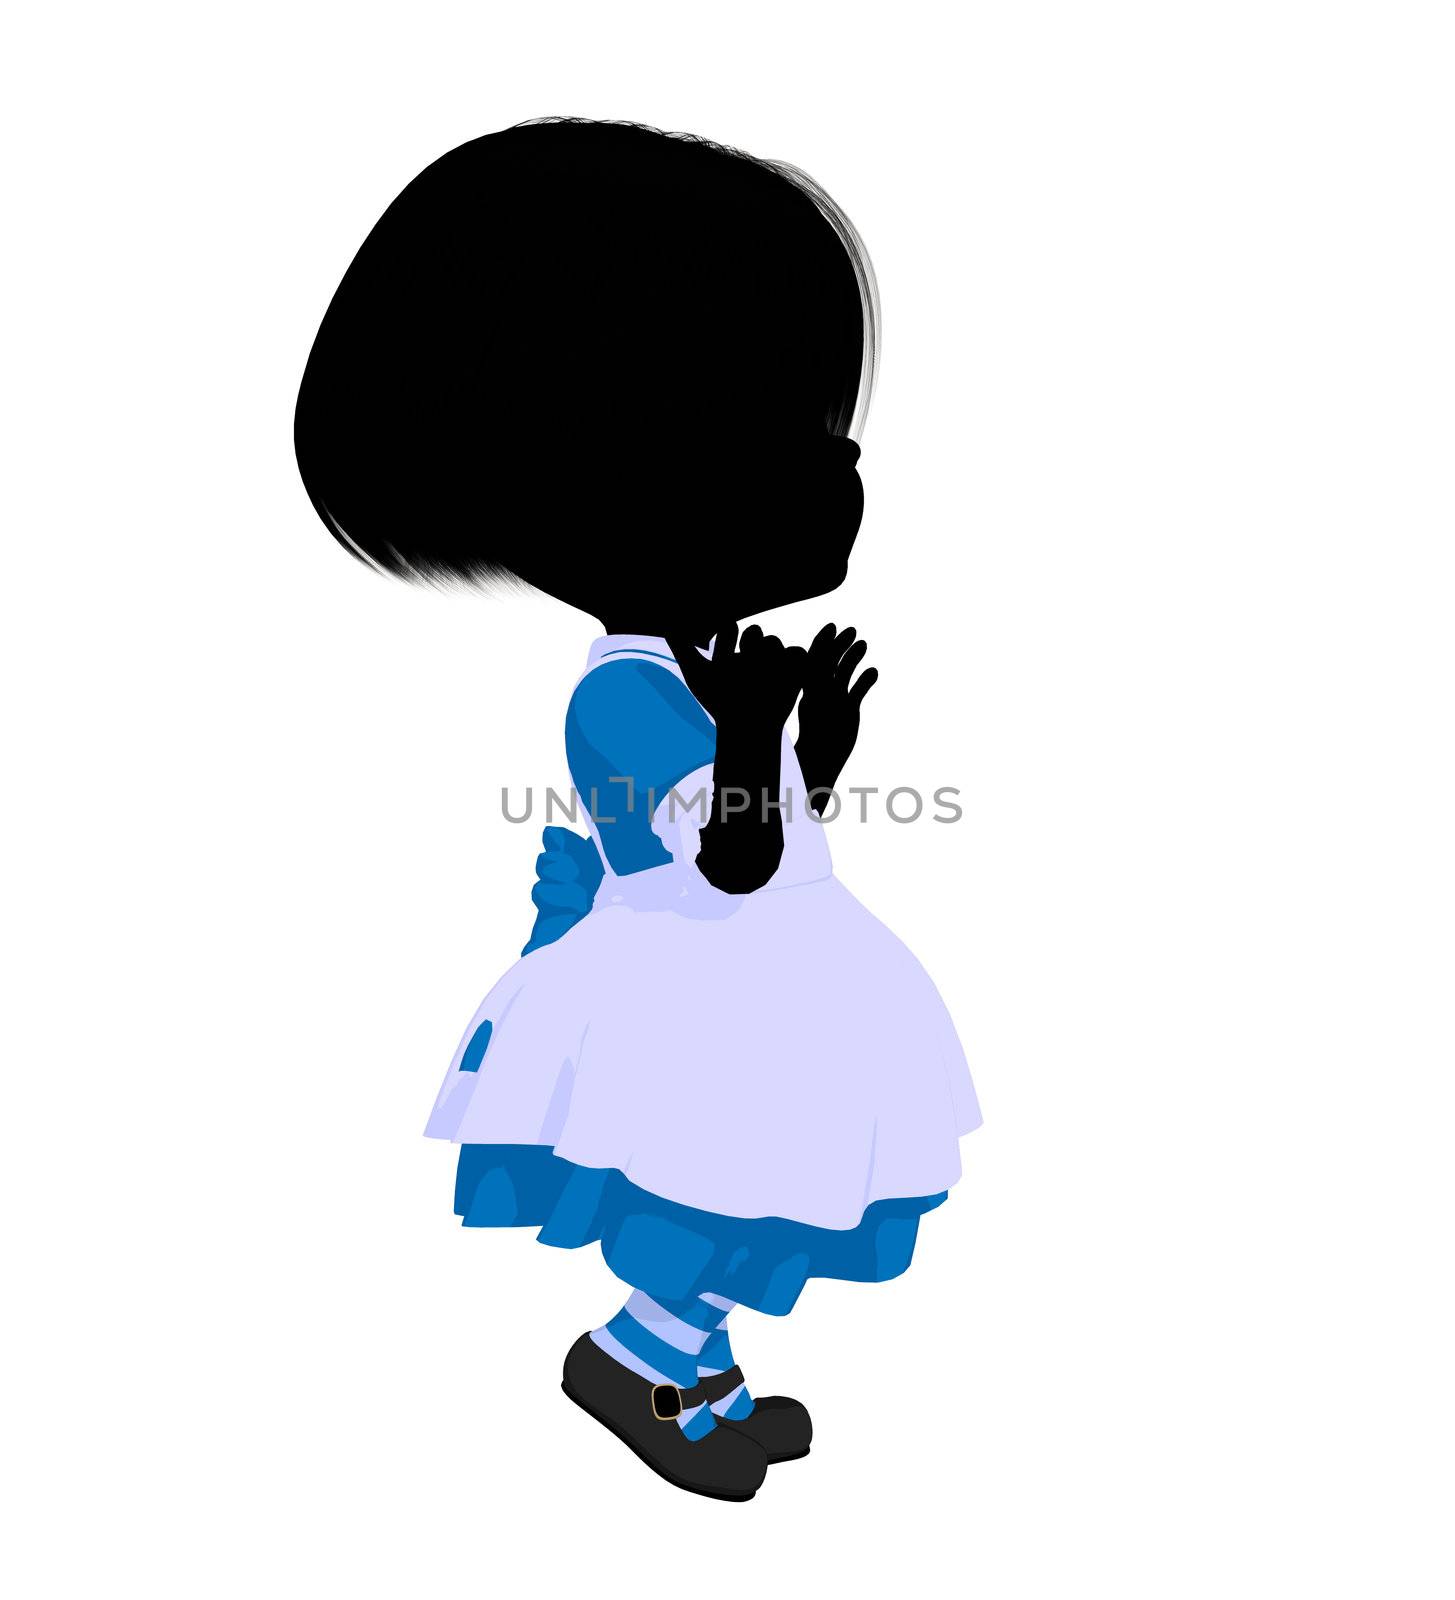 Little alice in wonderland illustration silhouette on a white background